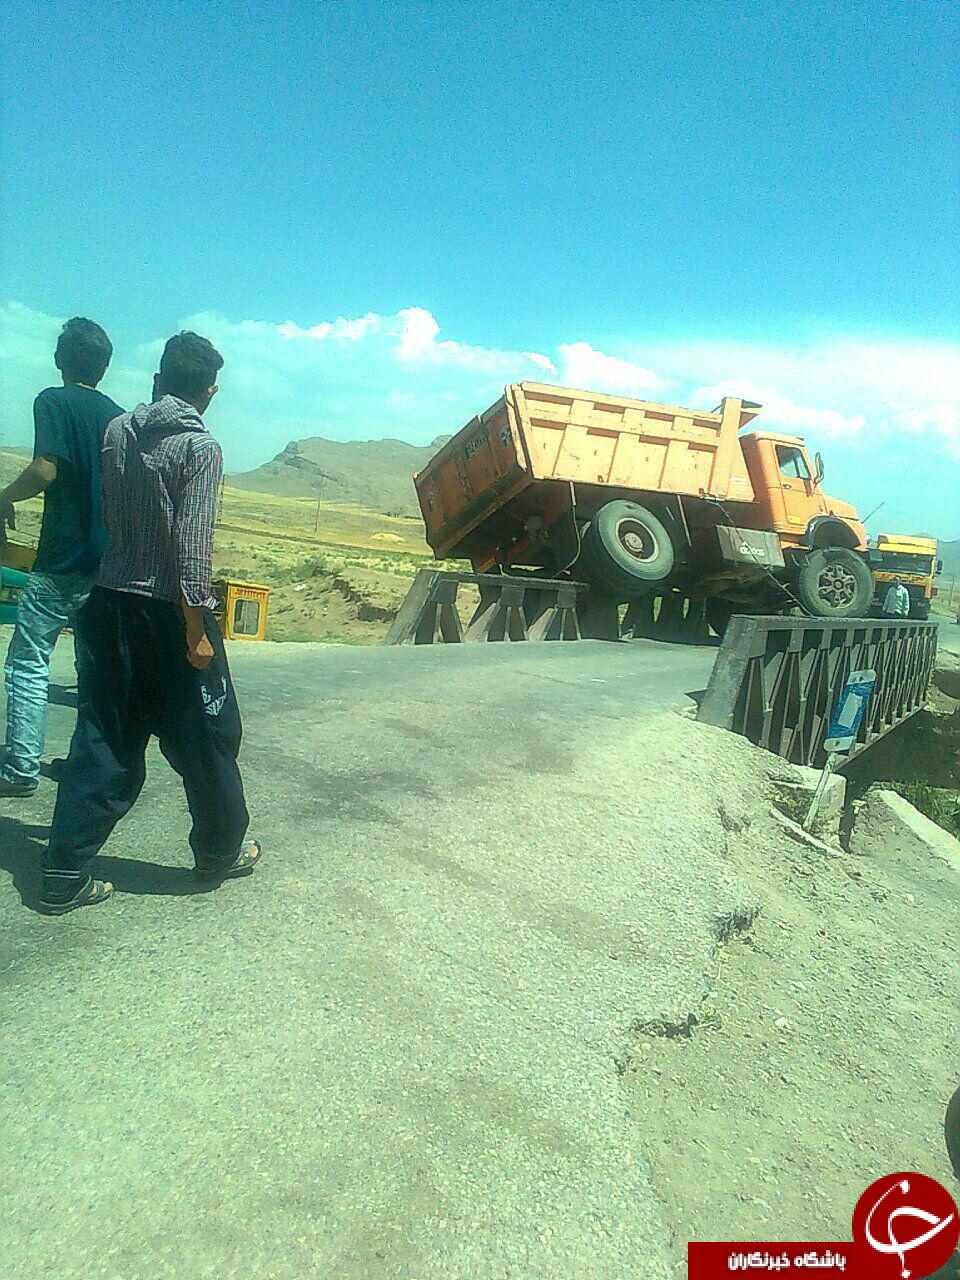 واژگونی کامیون در خطرناک ترین پل روستای کوچ تپه + تصاویر